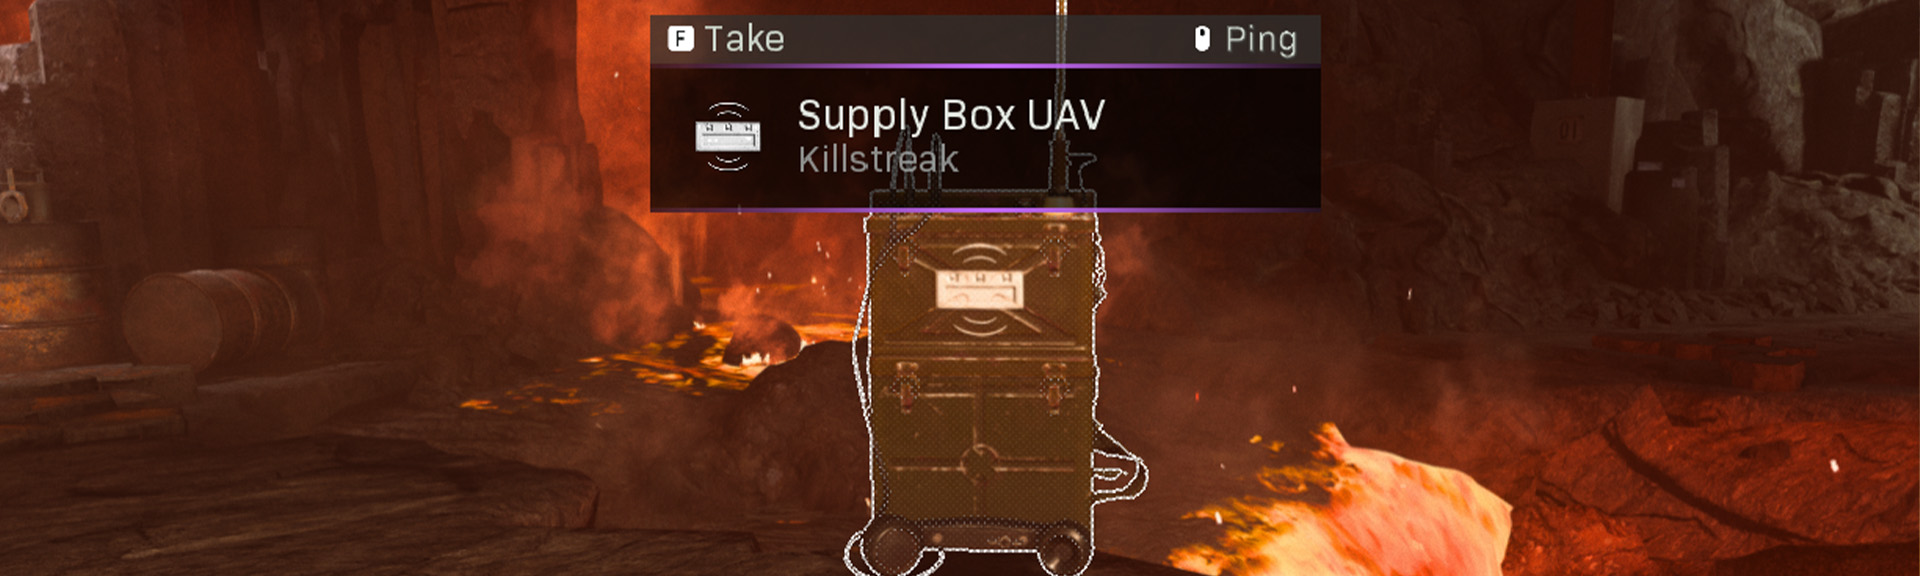 The new Supply Box UAV lootable item